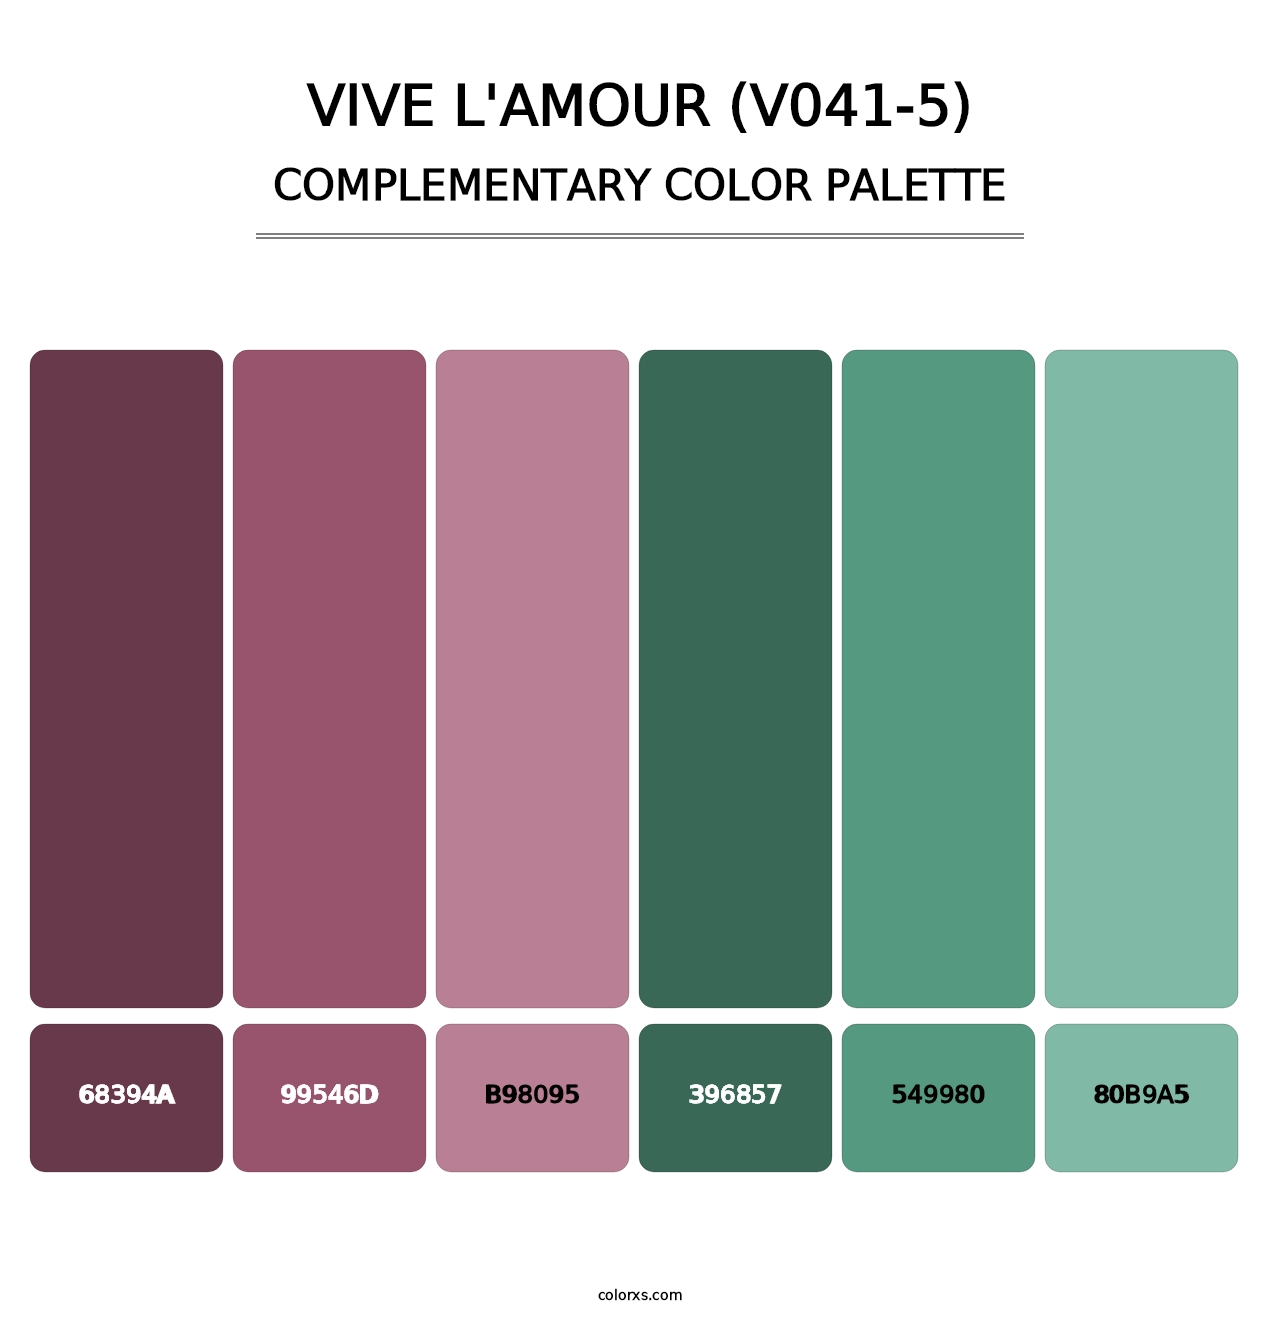 Vive l'amour (V041-5) - Complementary Color Palette